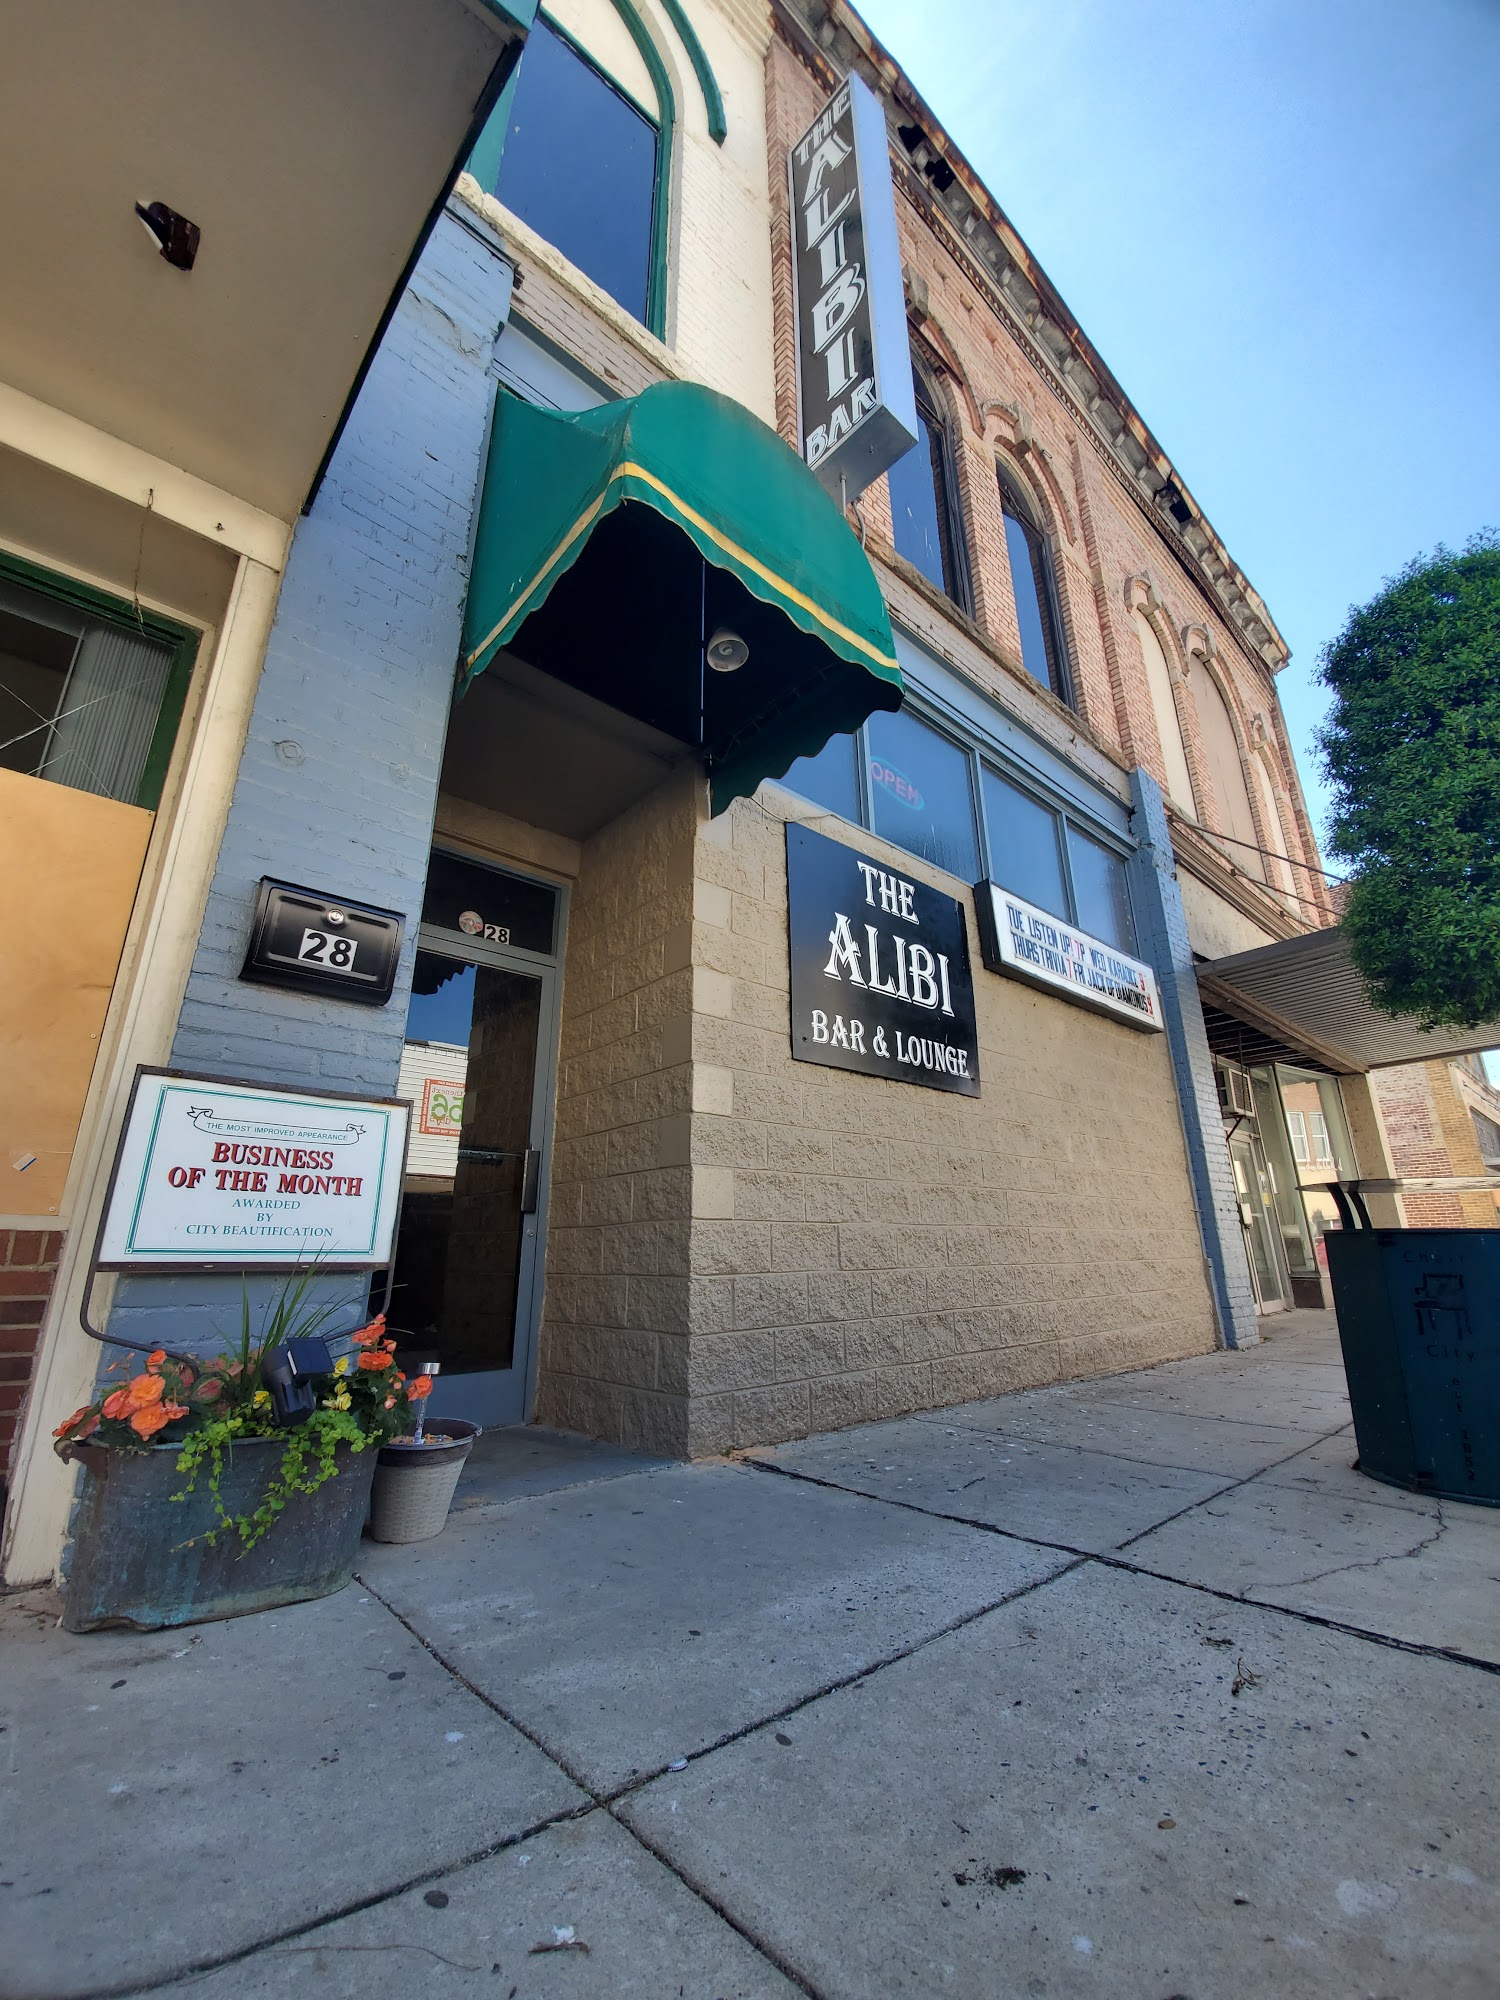 The Alibi Bar and Lounge